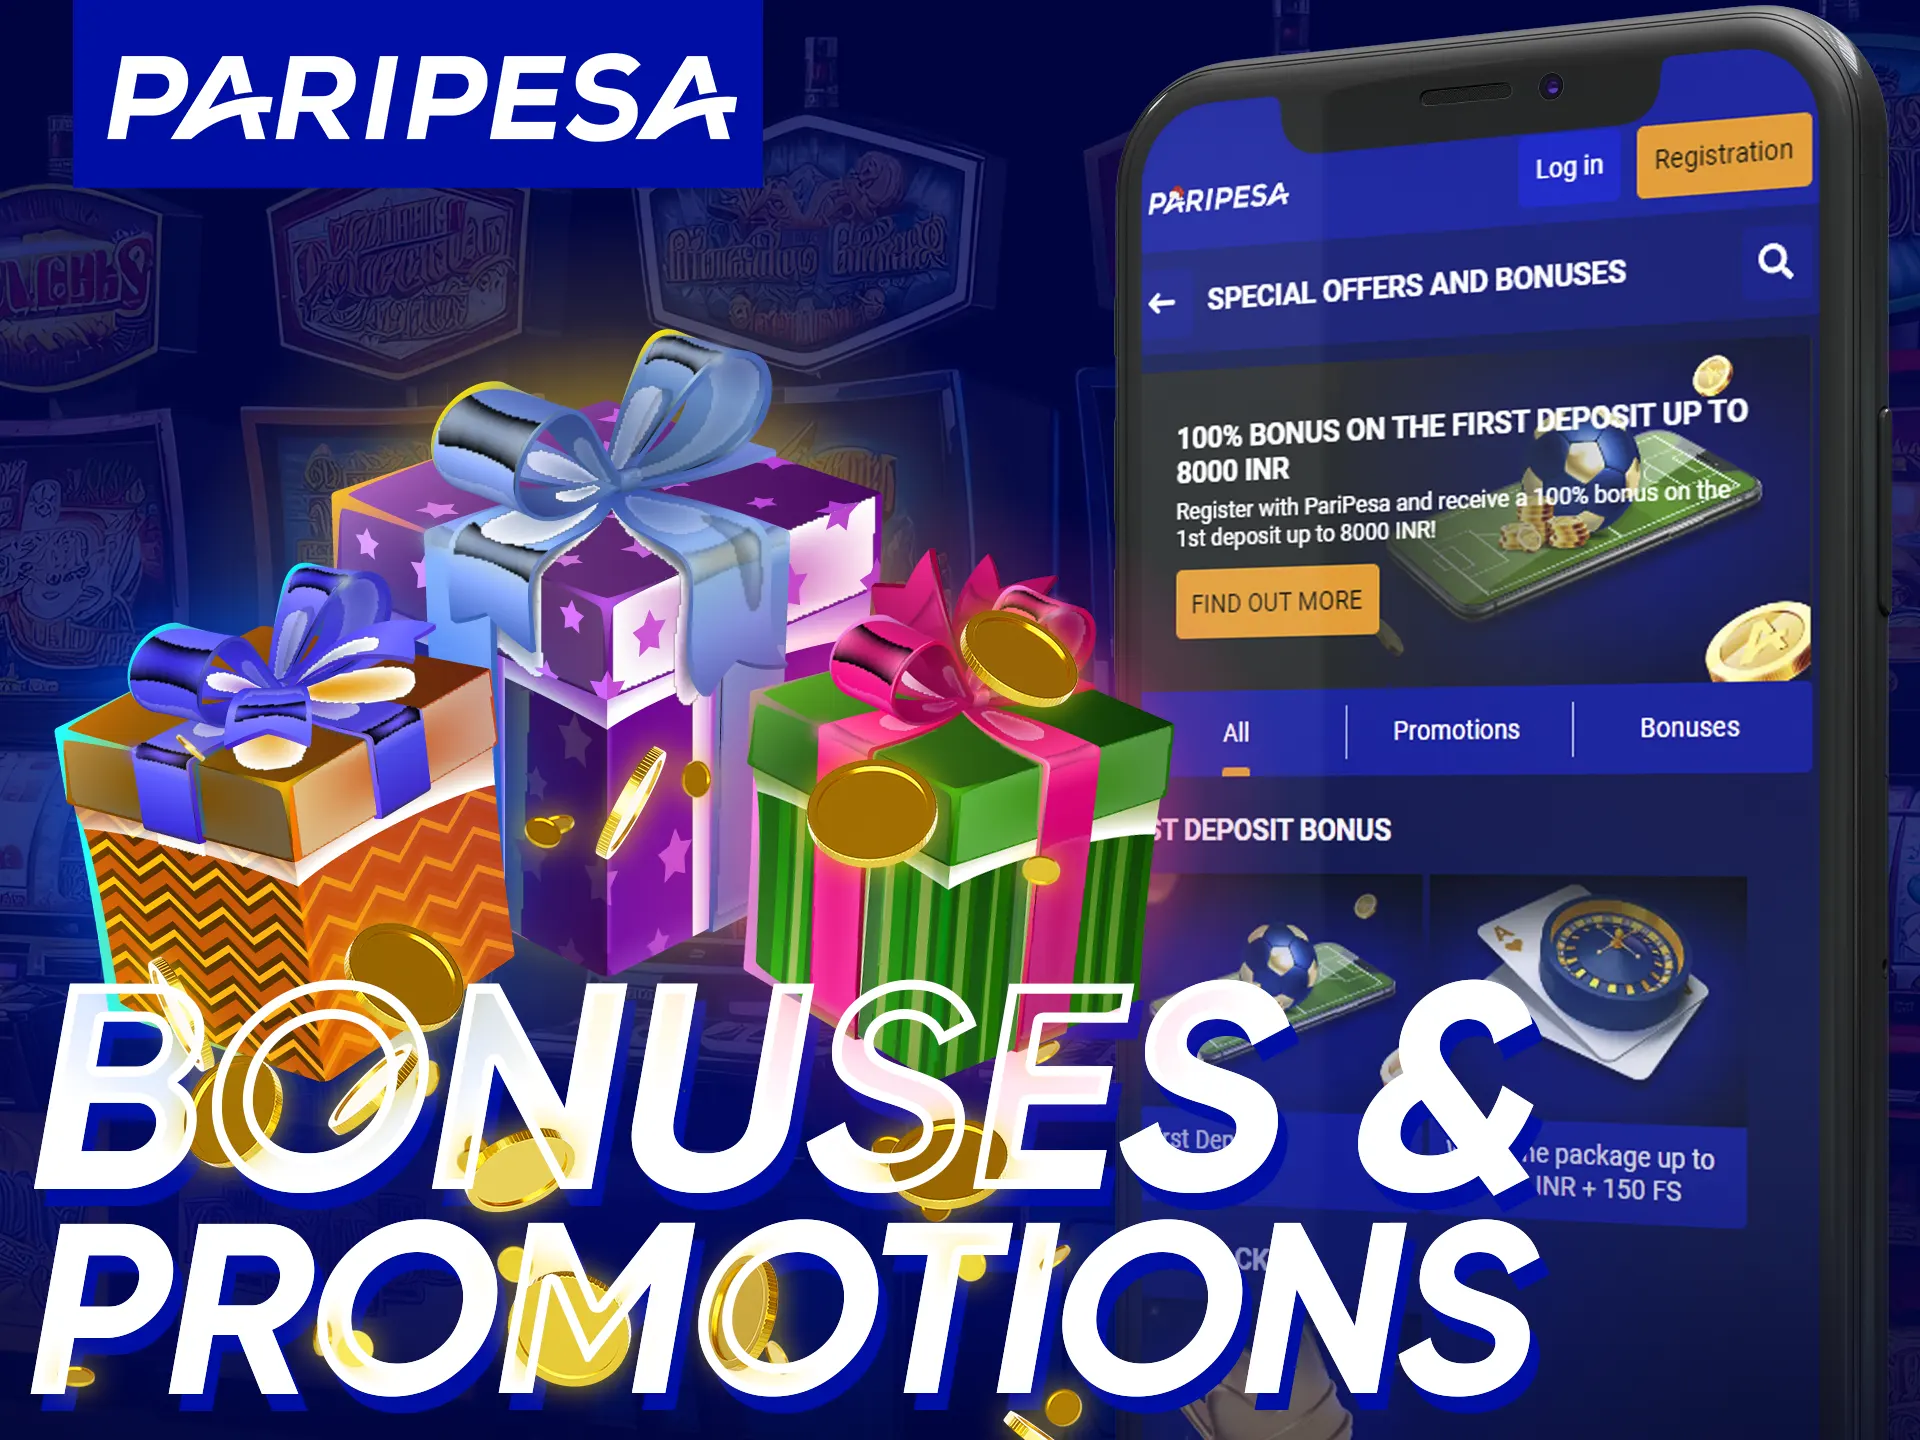 Paripesa Bonuses: Loyalty program, sports promos, cashback, freebets, reloads, first deposit, welcome package.